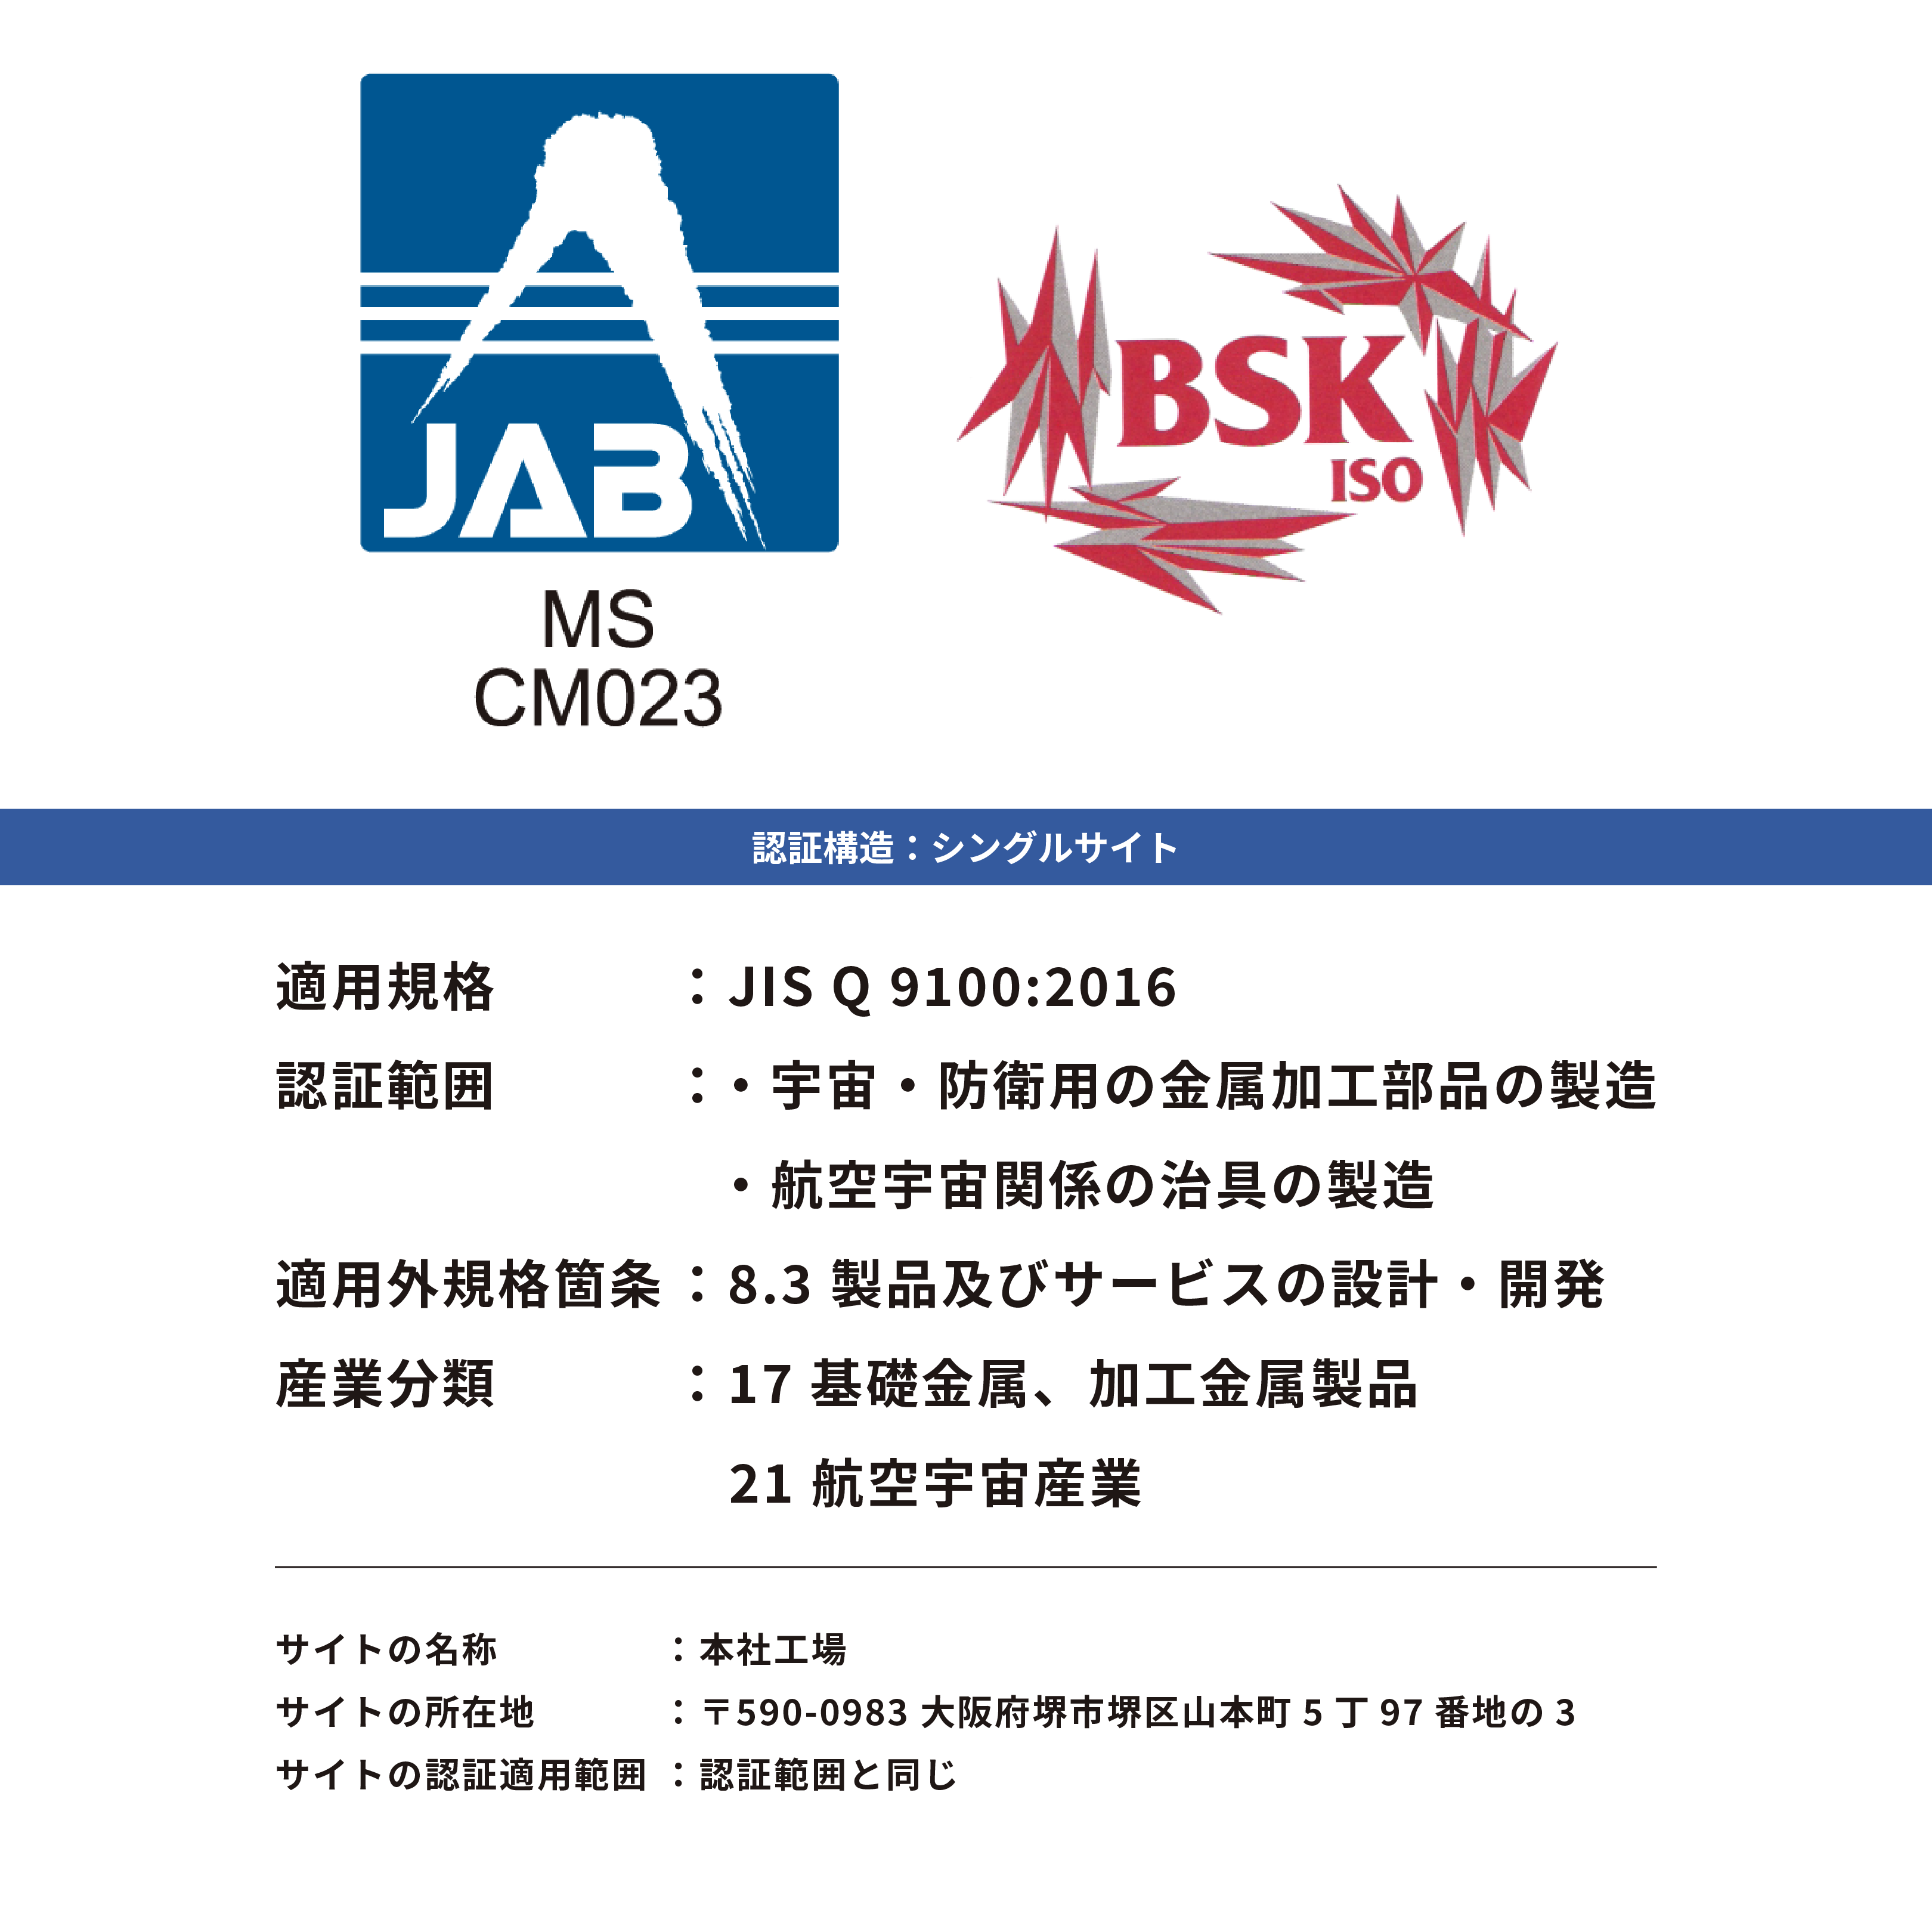 MS JAB・BSK ISO／認証構造:シングルサイト／適用規格：JIS Q 9100:2016／認証範囲：・宇宙・防衛用の金属加工部品の製造／適用外規格箇条：8.3 製品及びサービスの設計・開発／産業分類：17 基礎金属、加工金属製品 21 航空宇宙産業／サイトの名称：本社工場／サイトの所在地：〒590-0983 大阪府堺市堺区山本町5丁97番地の3／サイトの認証適用範囲：認証範囲と同じ